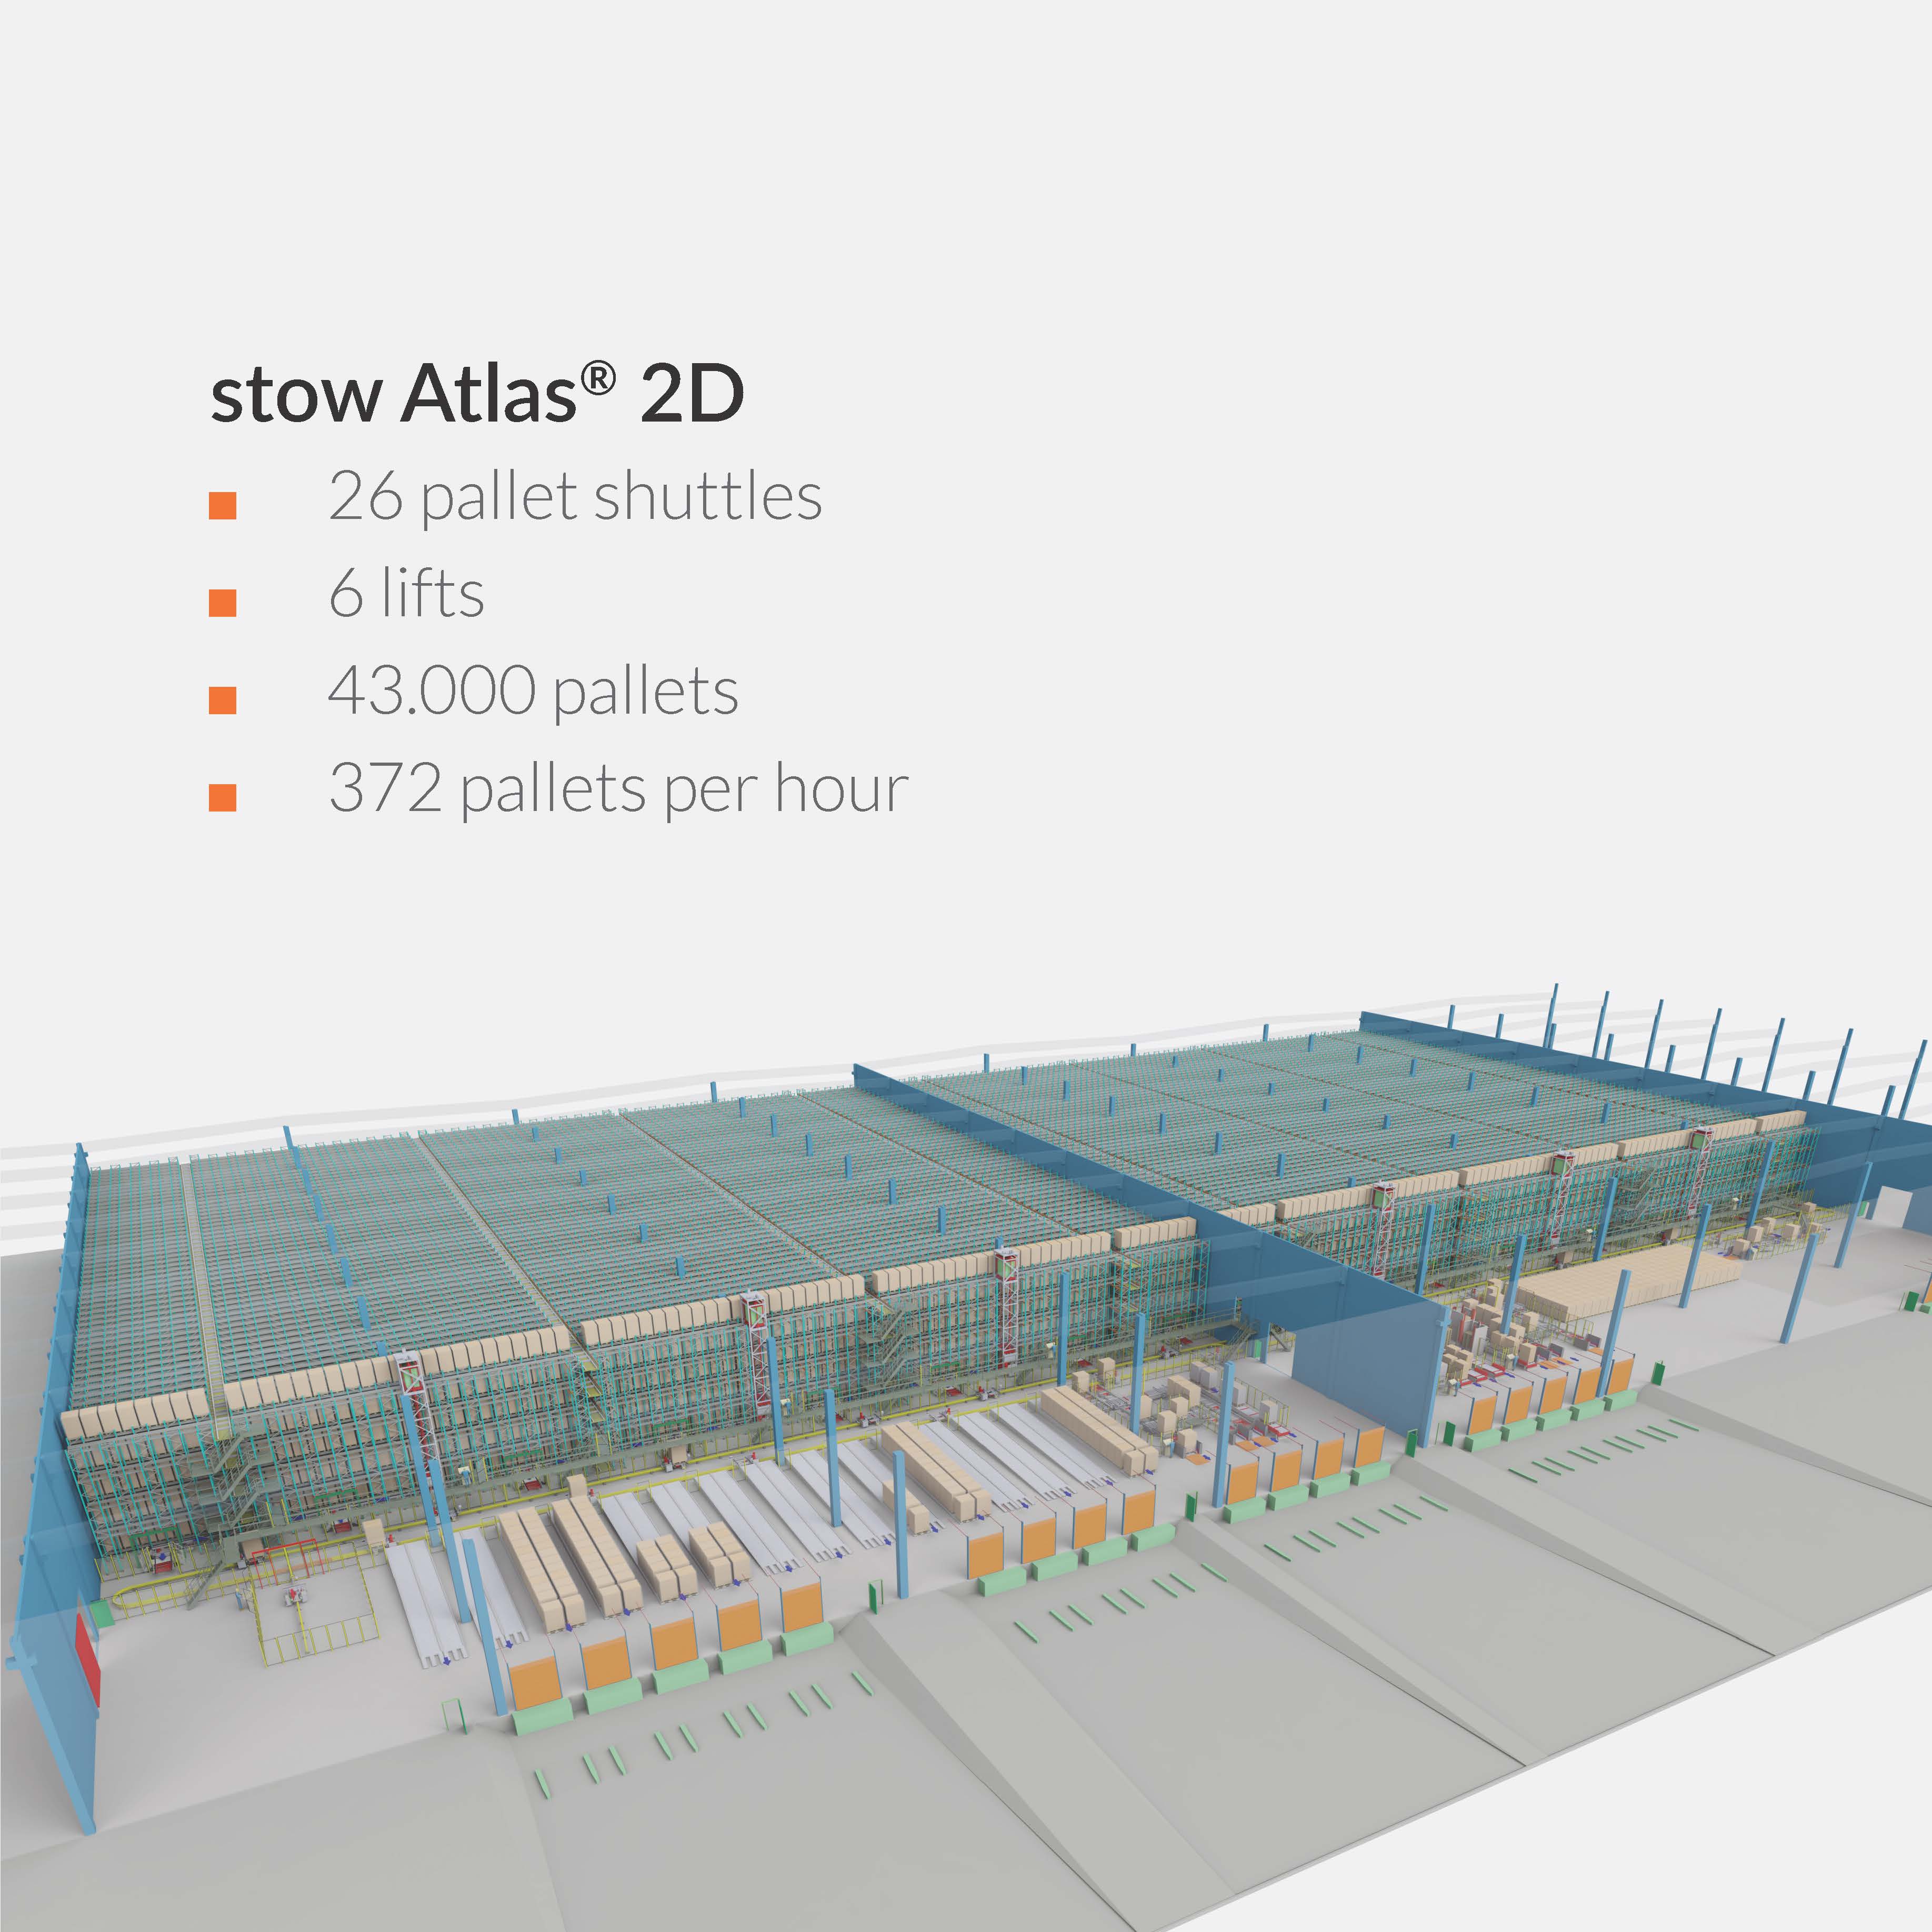 stow Atlas 2D render image